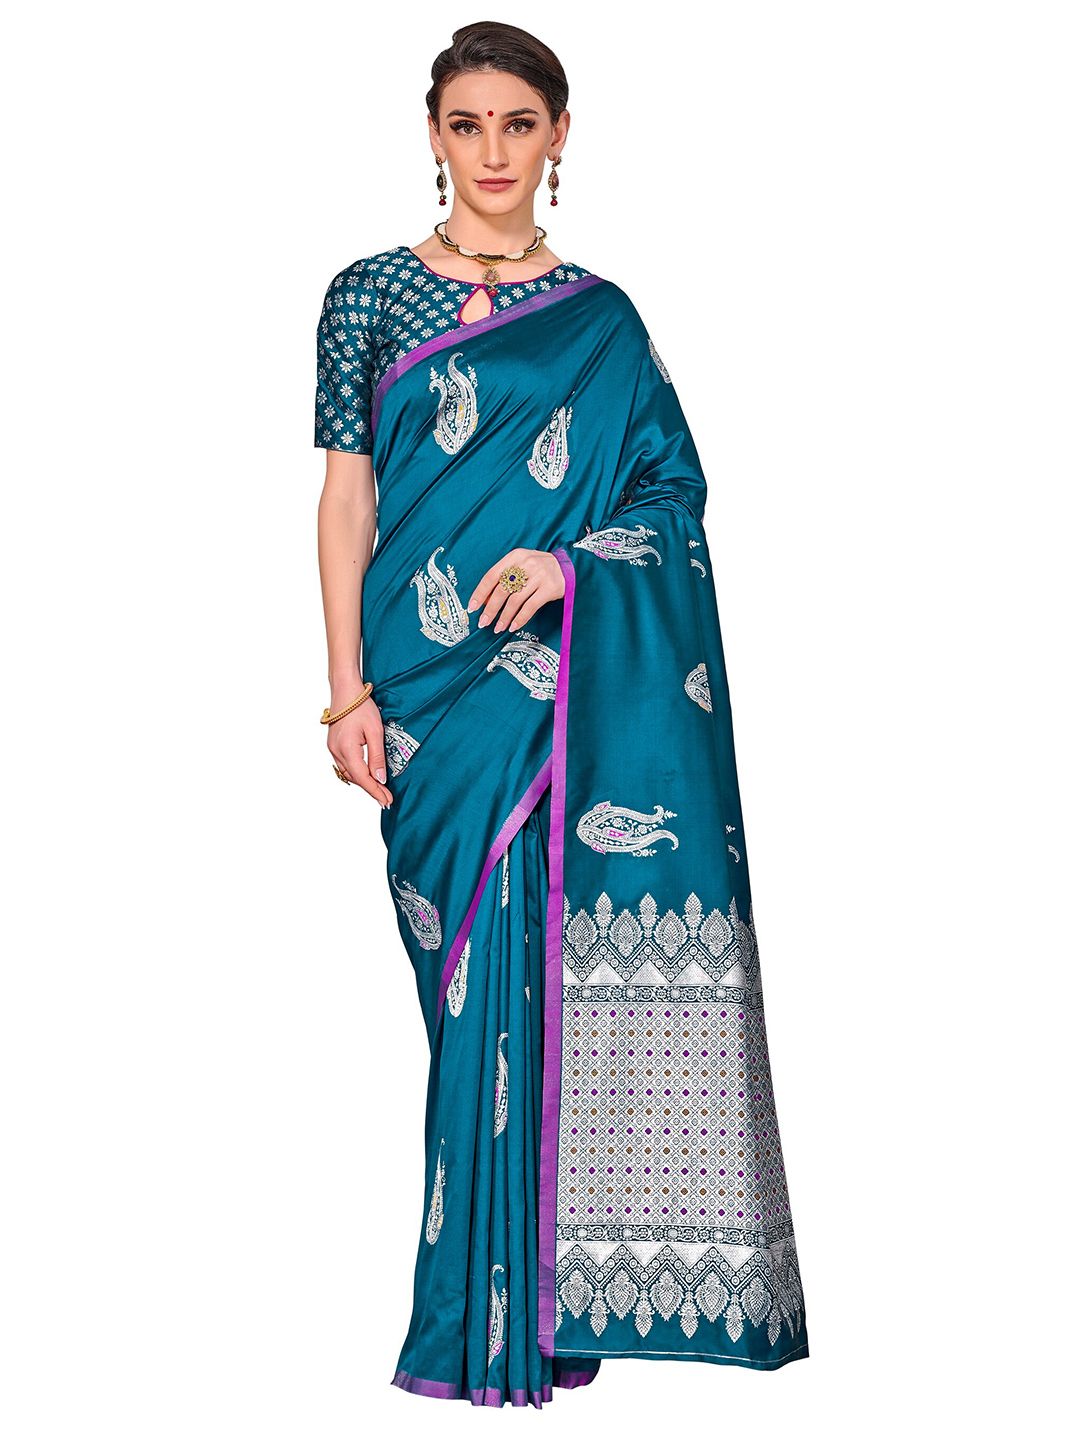 SARIYA Turquoise Blue & Silver-Toned Ethnic Motifs Zari Silk Blend Banarasi Saree Price in India